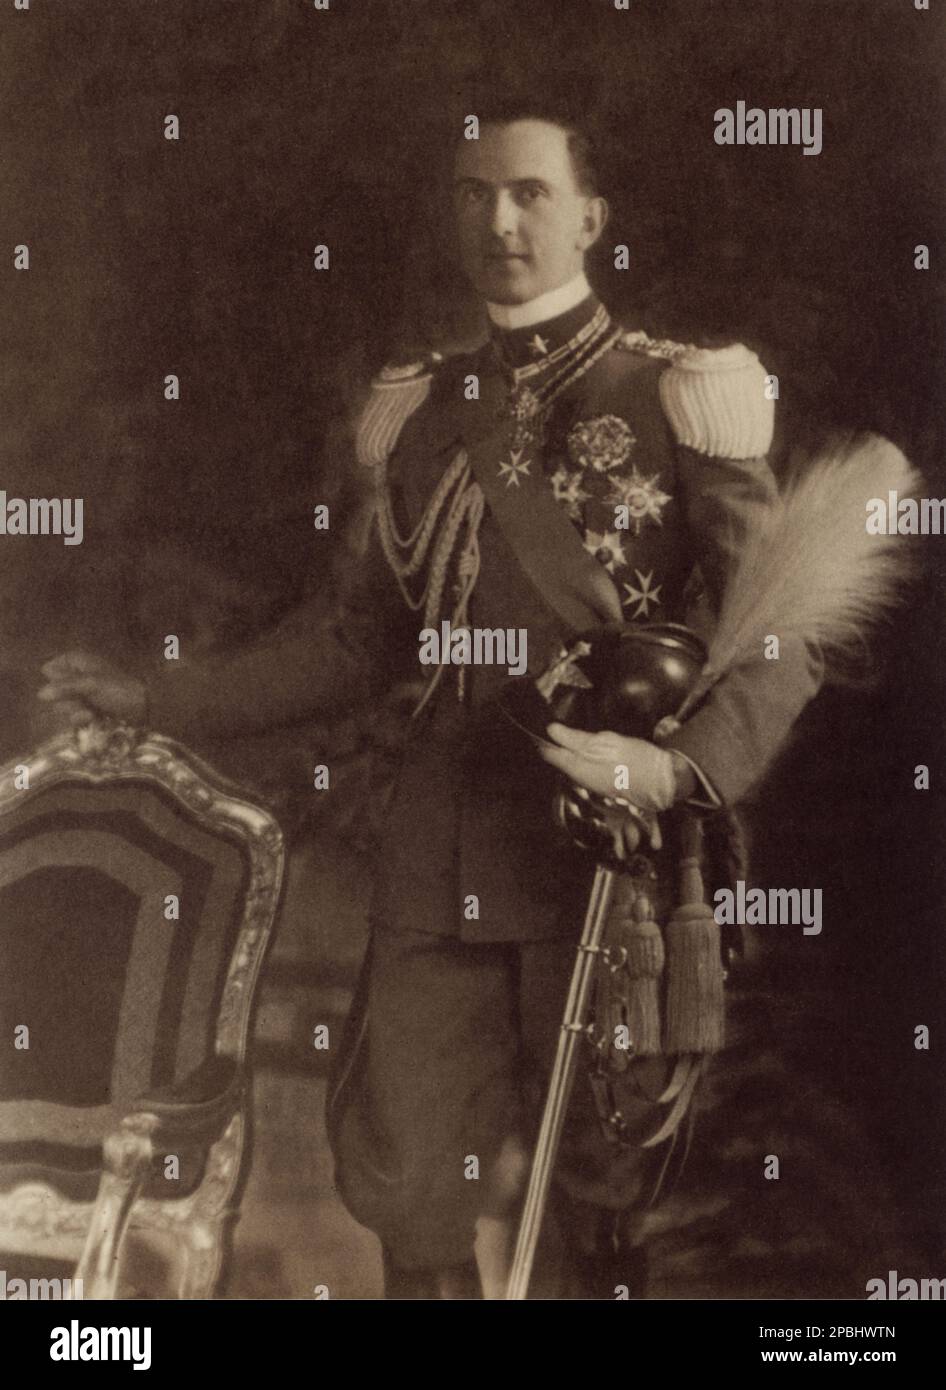 1932 , ITALIEN : UMBERTO di SAVOIA Prinz von Piemont ( 1904 - 1983 ) , späterer König von Italien UMBERTO II , Sohn des Königs von Italien VITTORIO EMANUELE III und Königin ELENA ( del Montenegro ) . Foto: VAGHI , Parma - ITALIA - CASA SAVOIA - REALI - Nobiltà ITALIANA - SAVOY - ADEL - KÖNIGE - GESCHICHTE - FOTOSTORICHE - Könige - nobili - Nobiltà - principe reale - BELGIO - Portrait - ritratto - Militäruniform - uniforme divisa militare - Federn - Piume - Piuma medaglie Medaglie Medaglia Medaglia Halsband colletto Archivio GBB Stockfoto